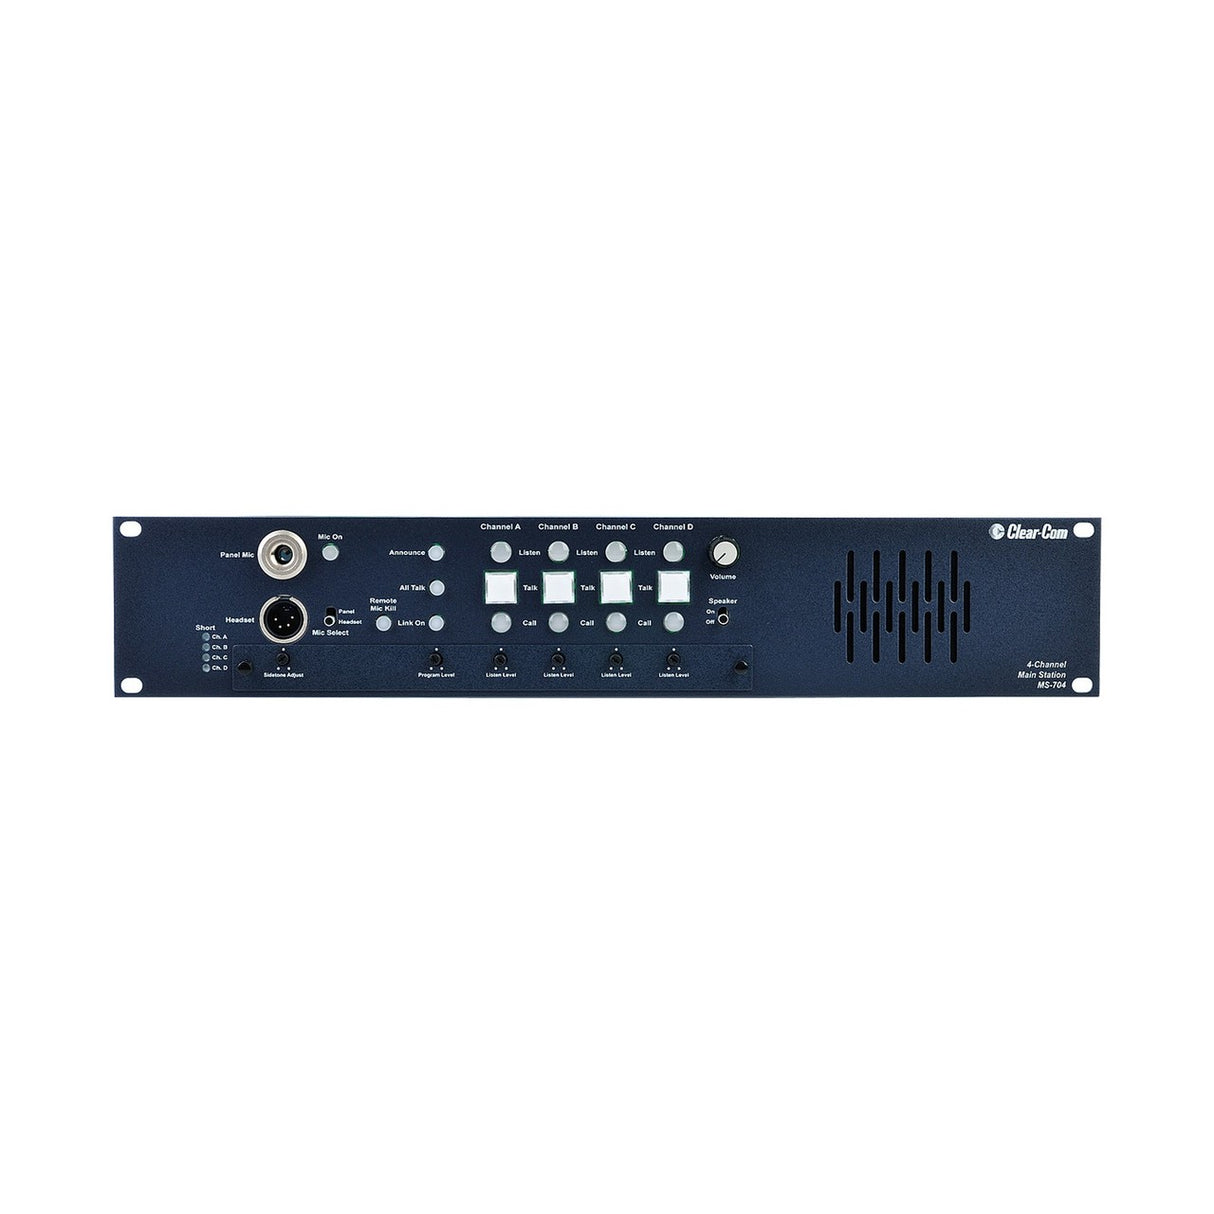 Clear-Com MS-704 | 4 Channel Headset Speaker Main Station Intercom